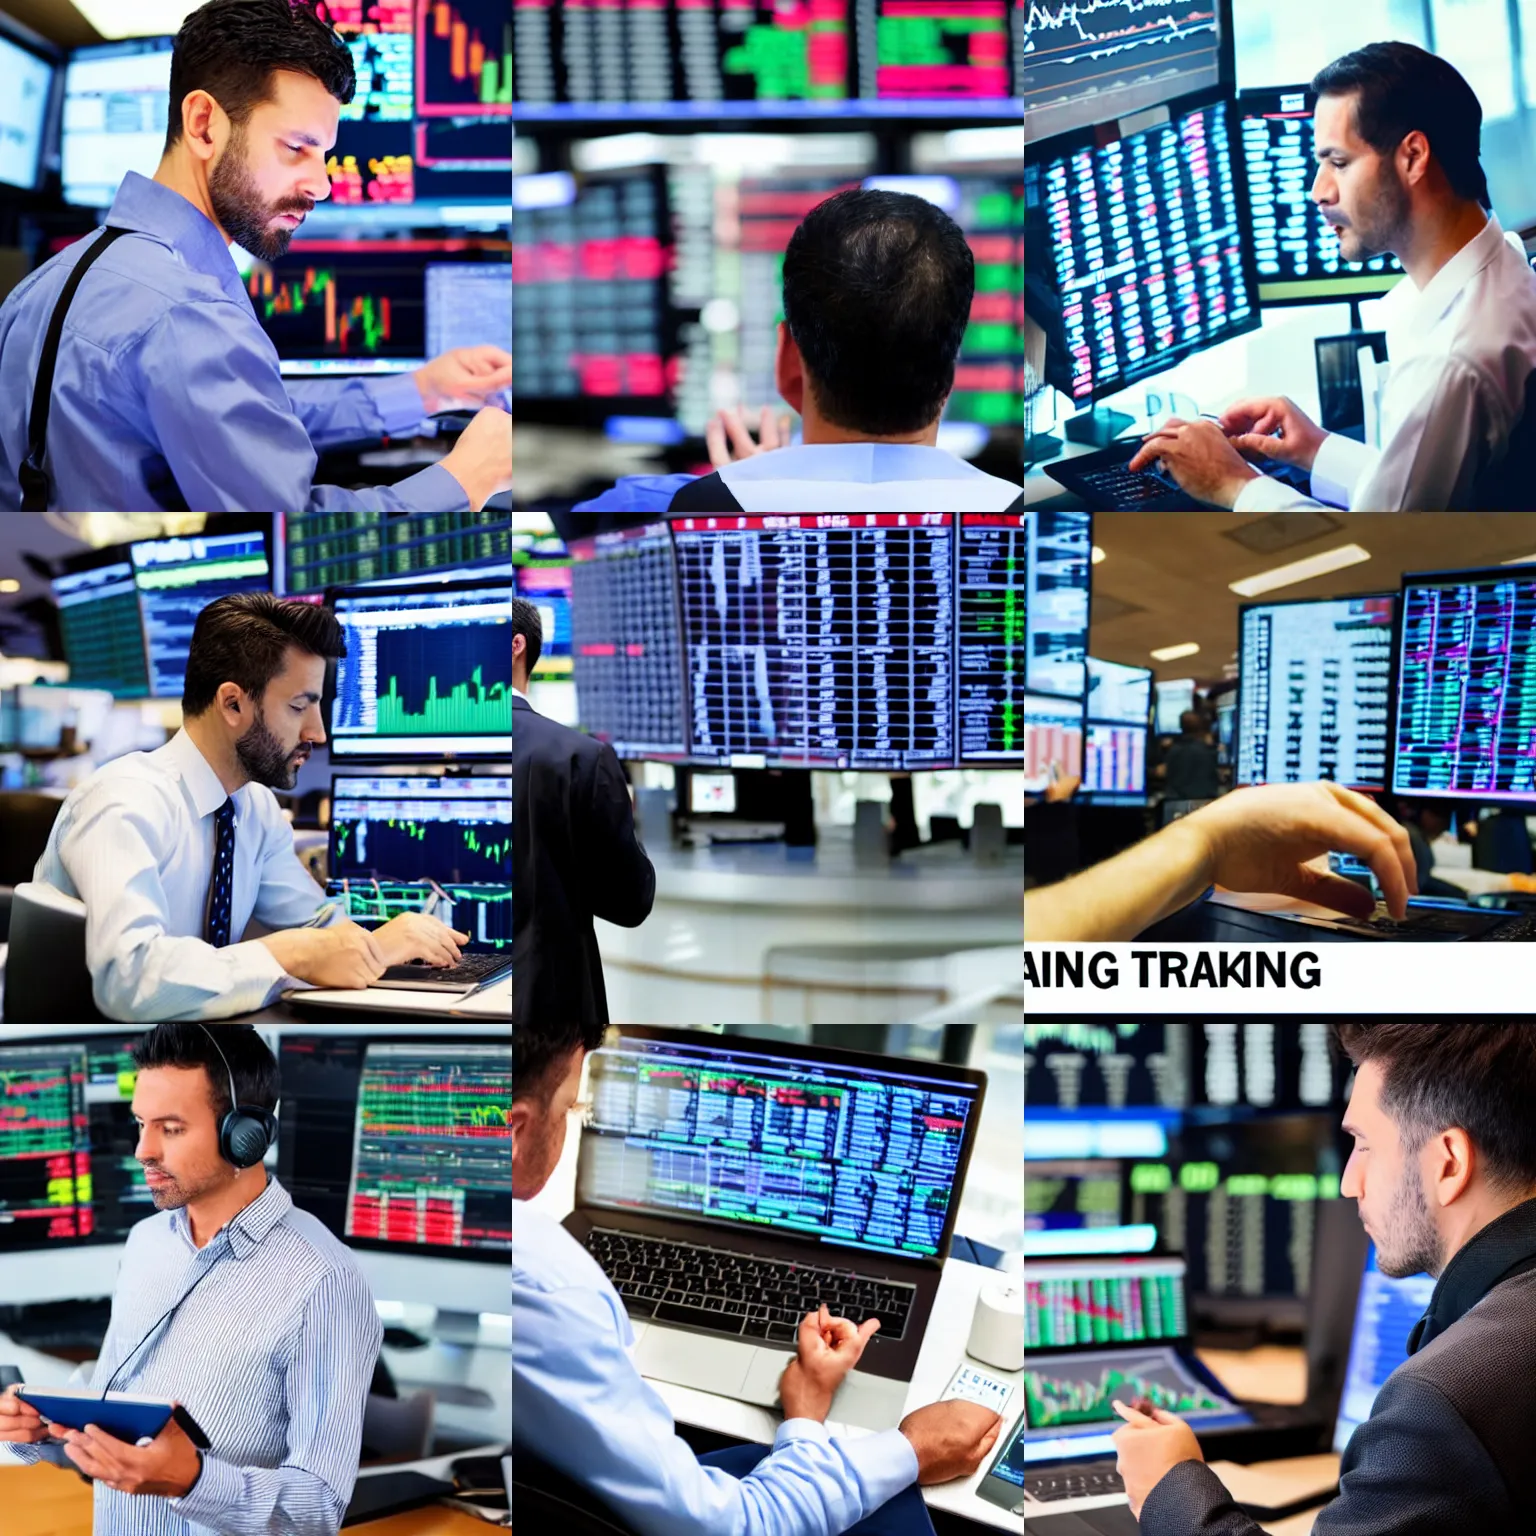 Prompt: man trading stocks